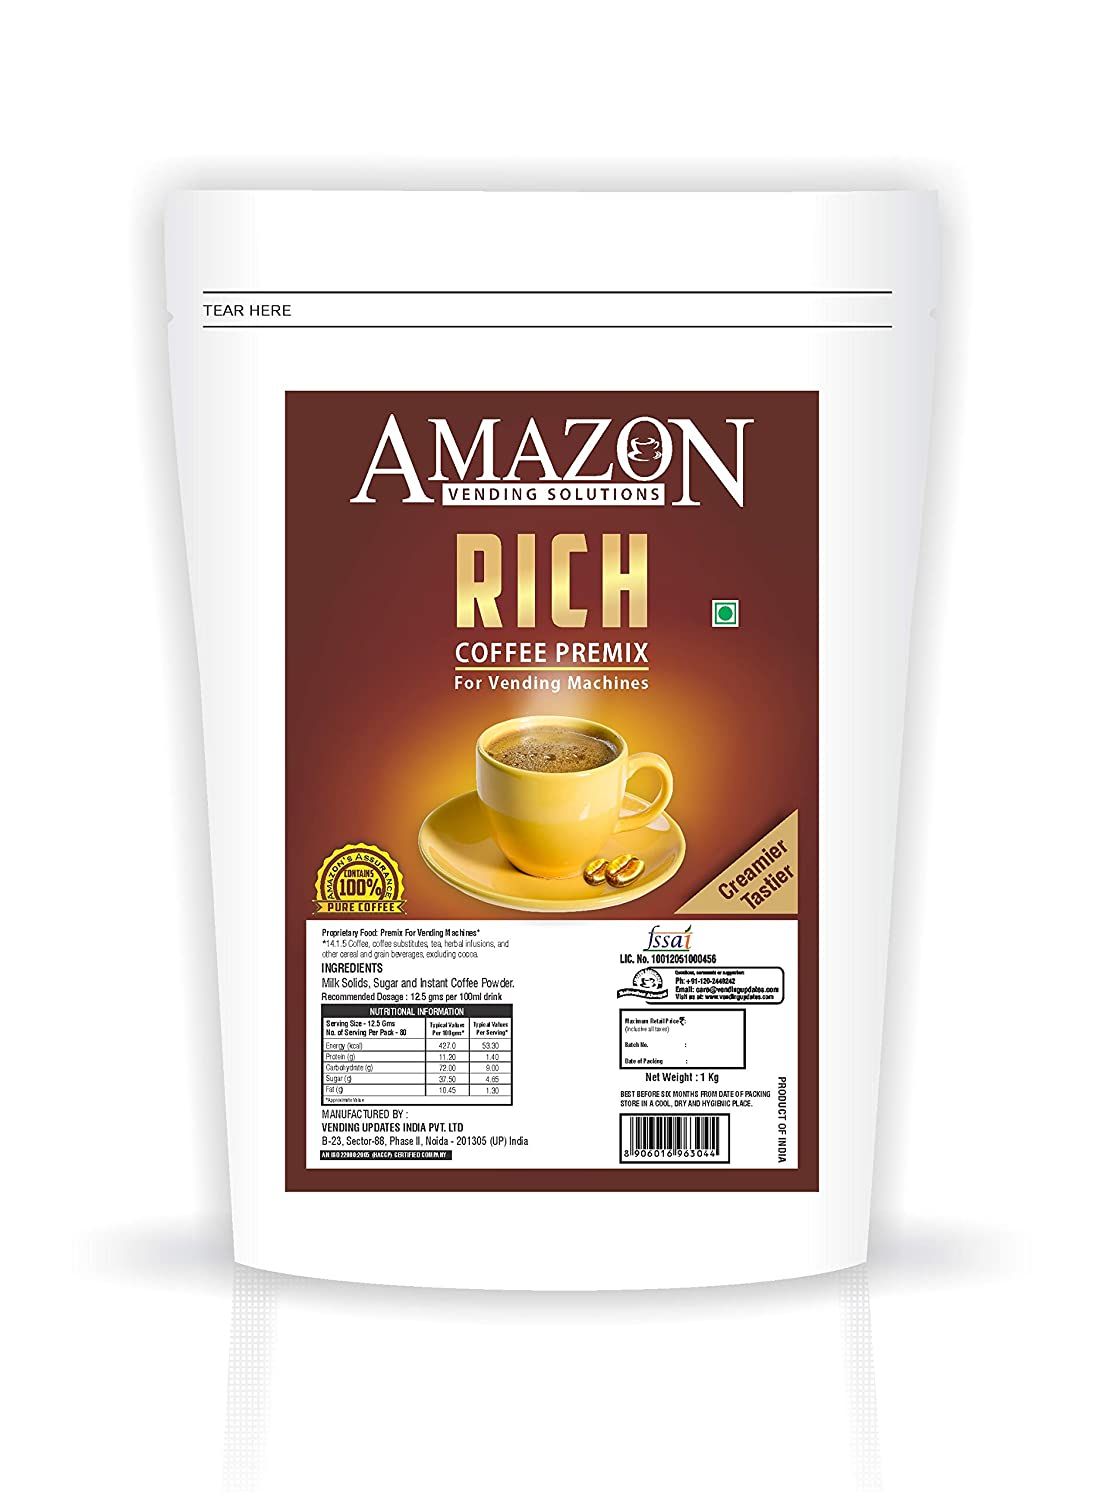 AMZN Instant Rich Coffee Premix Image